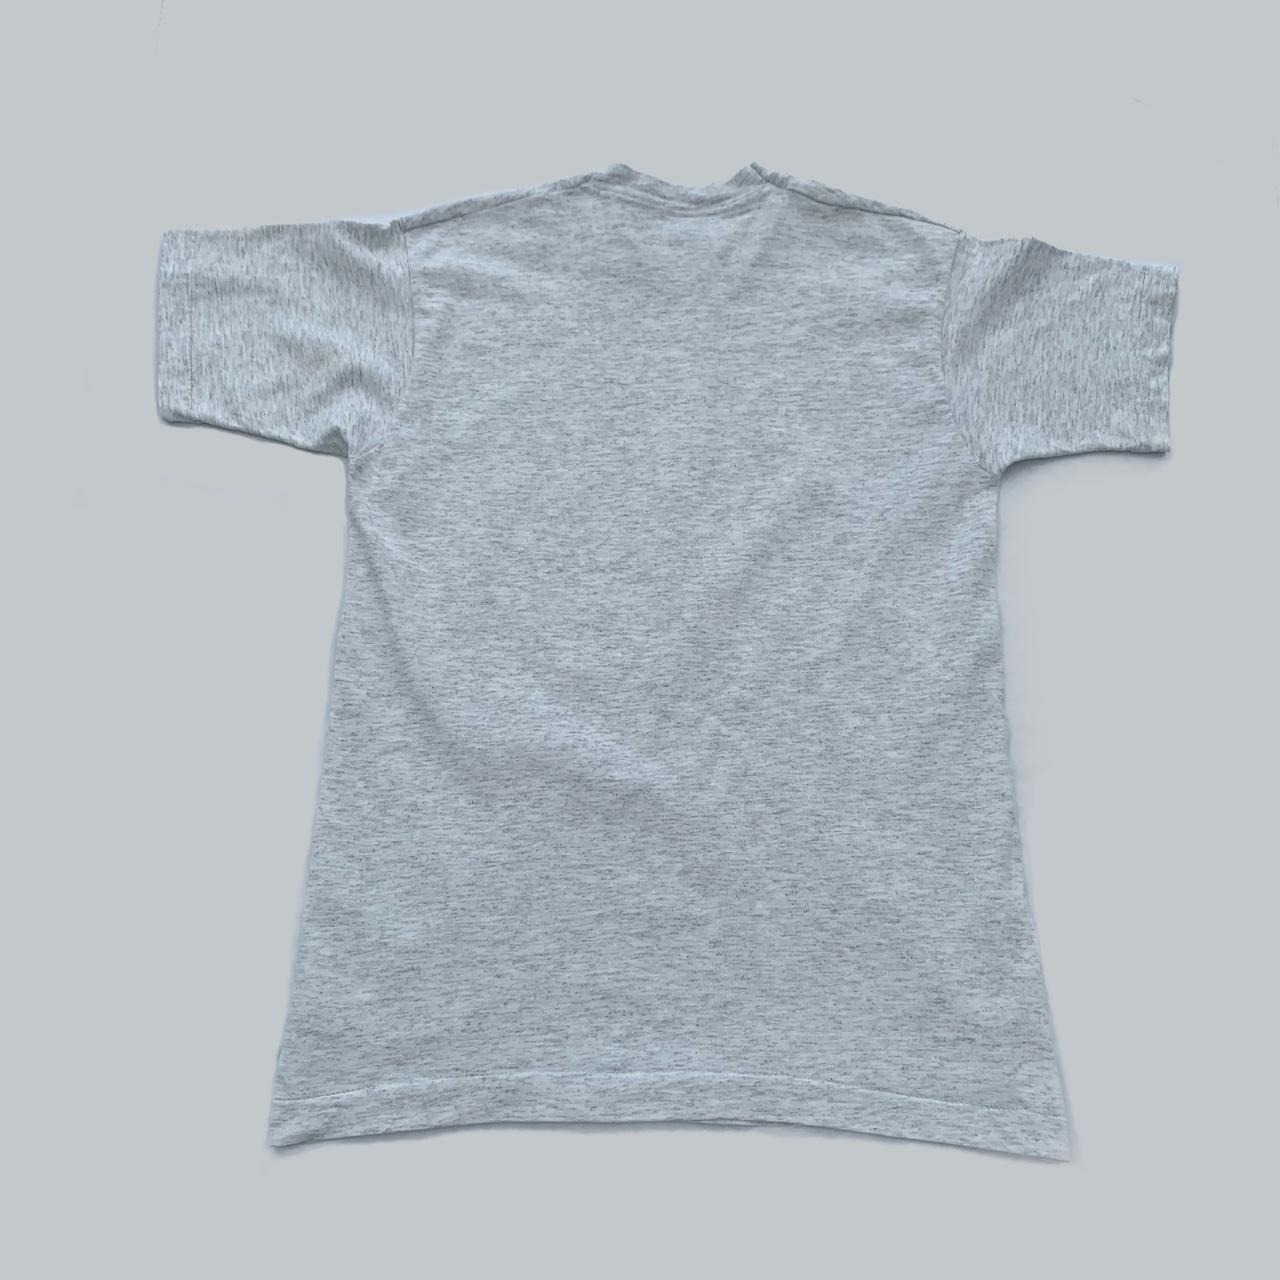 Fruit of the Loom Men's Grey T-shirt (3)